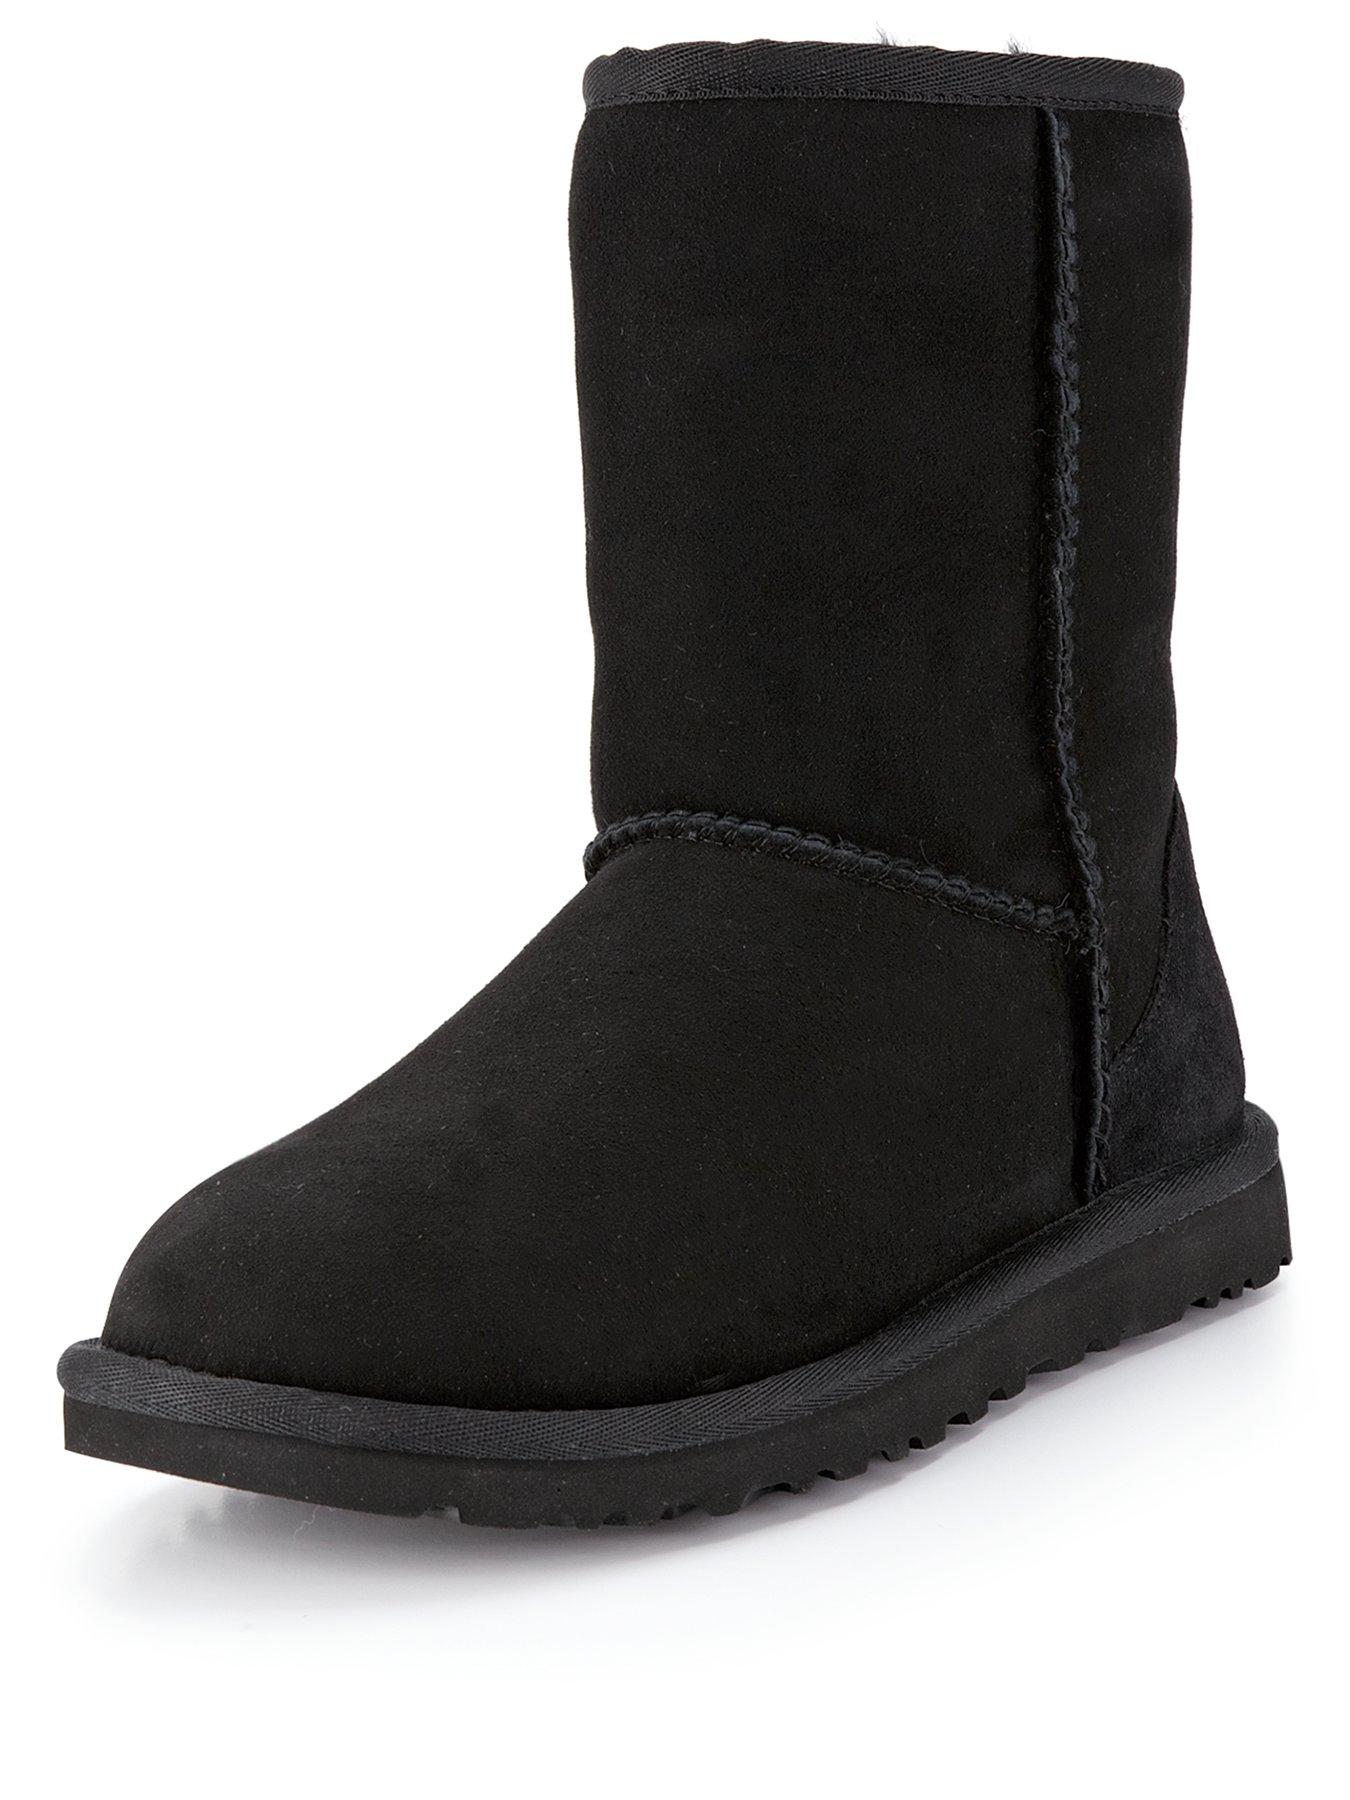 black ugg boots size 3